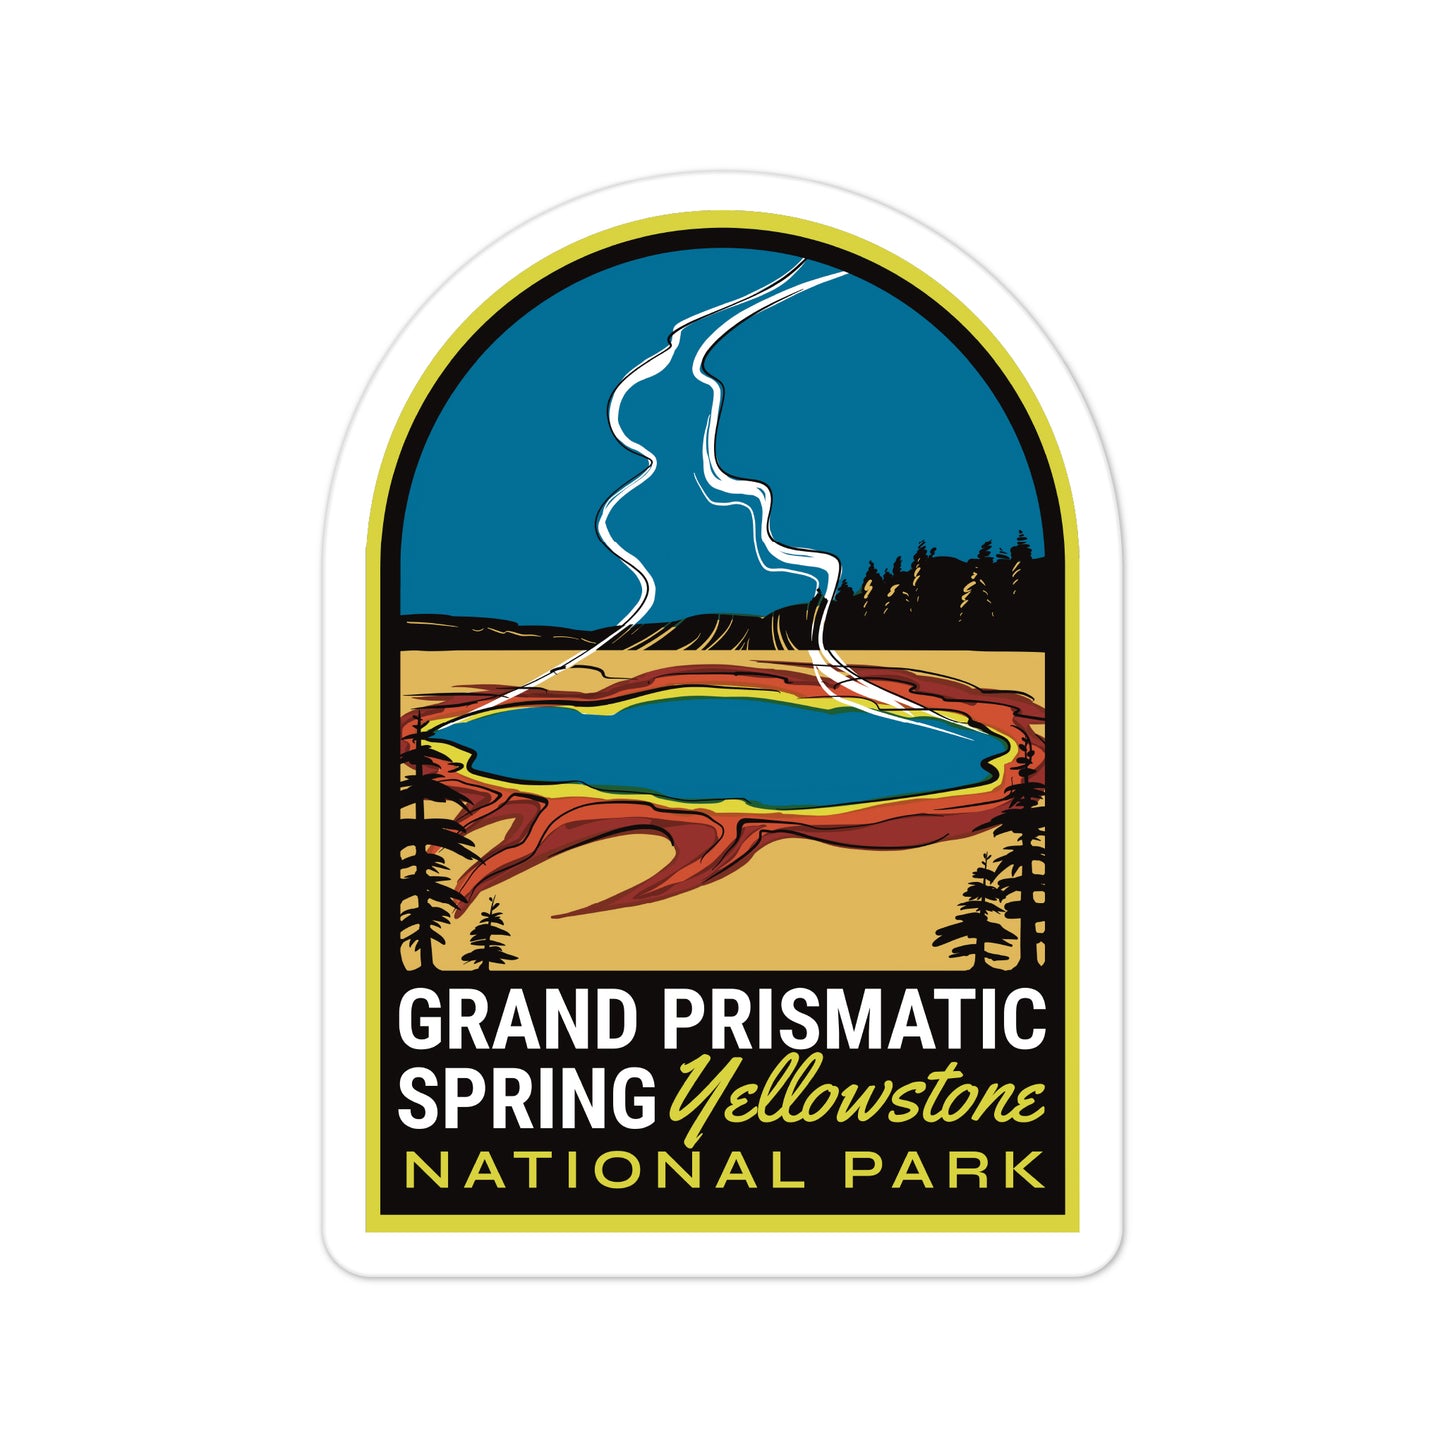 A sticker of Grand Prismatic Spring